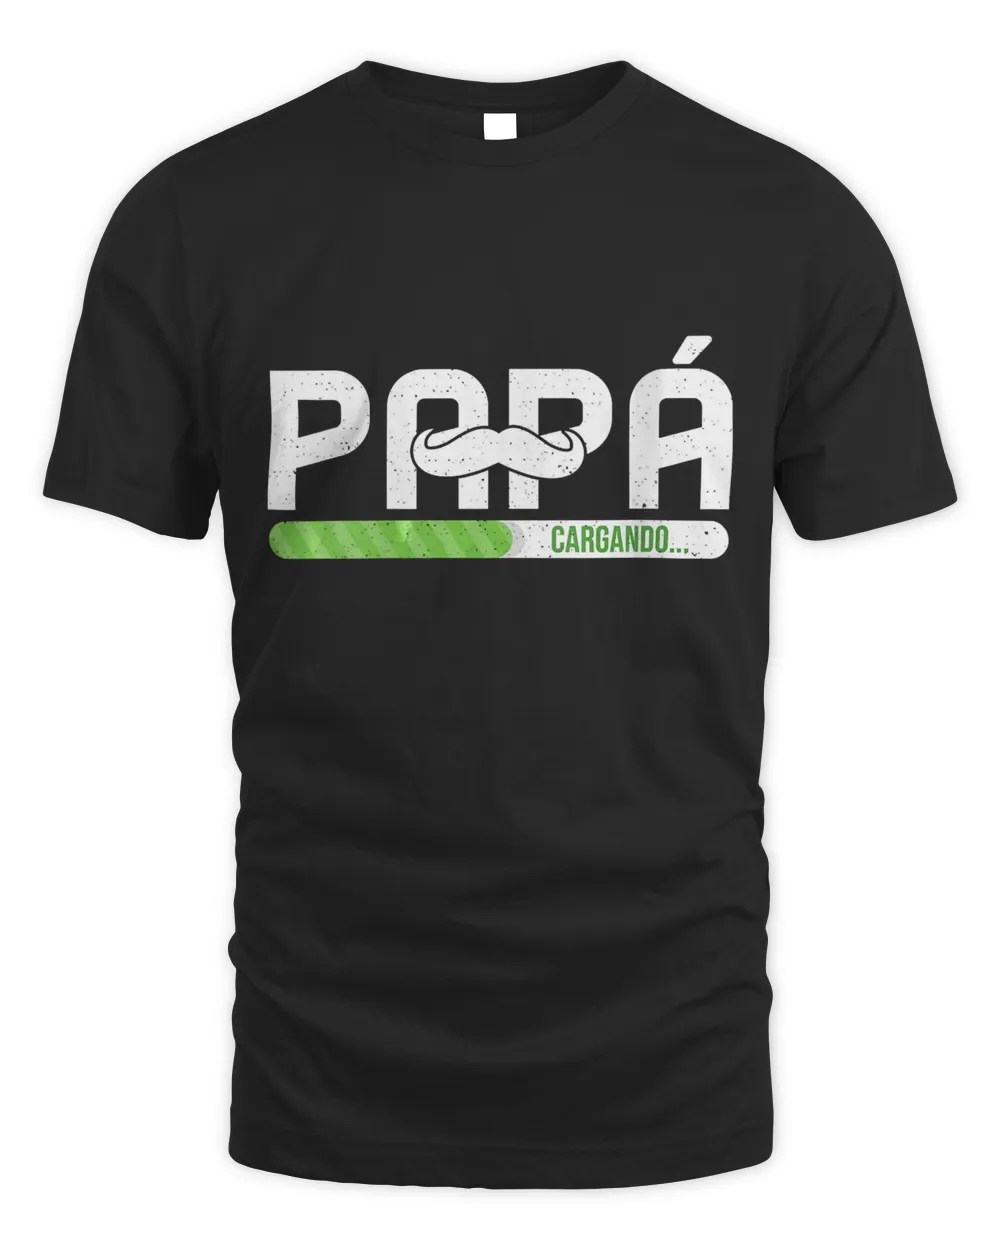 Womens Camiseta En Espanol Para Nuevo Papa Cargando In Spanish V-Neck T-Shirt